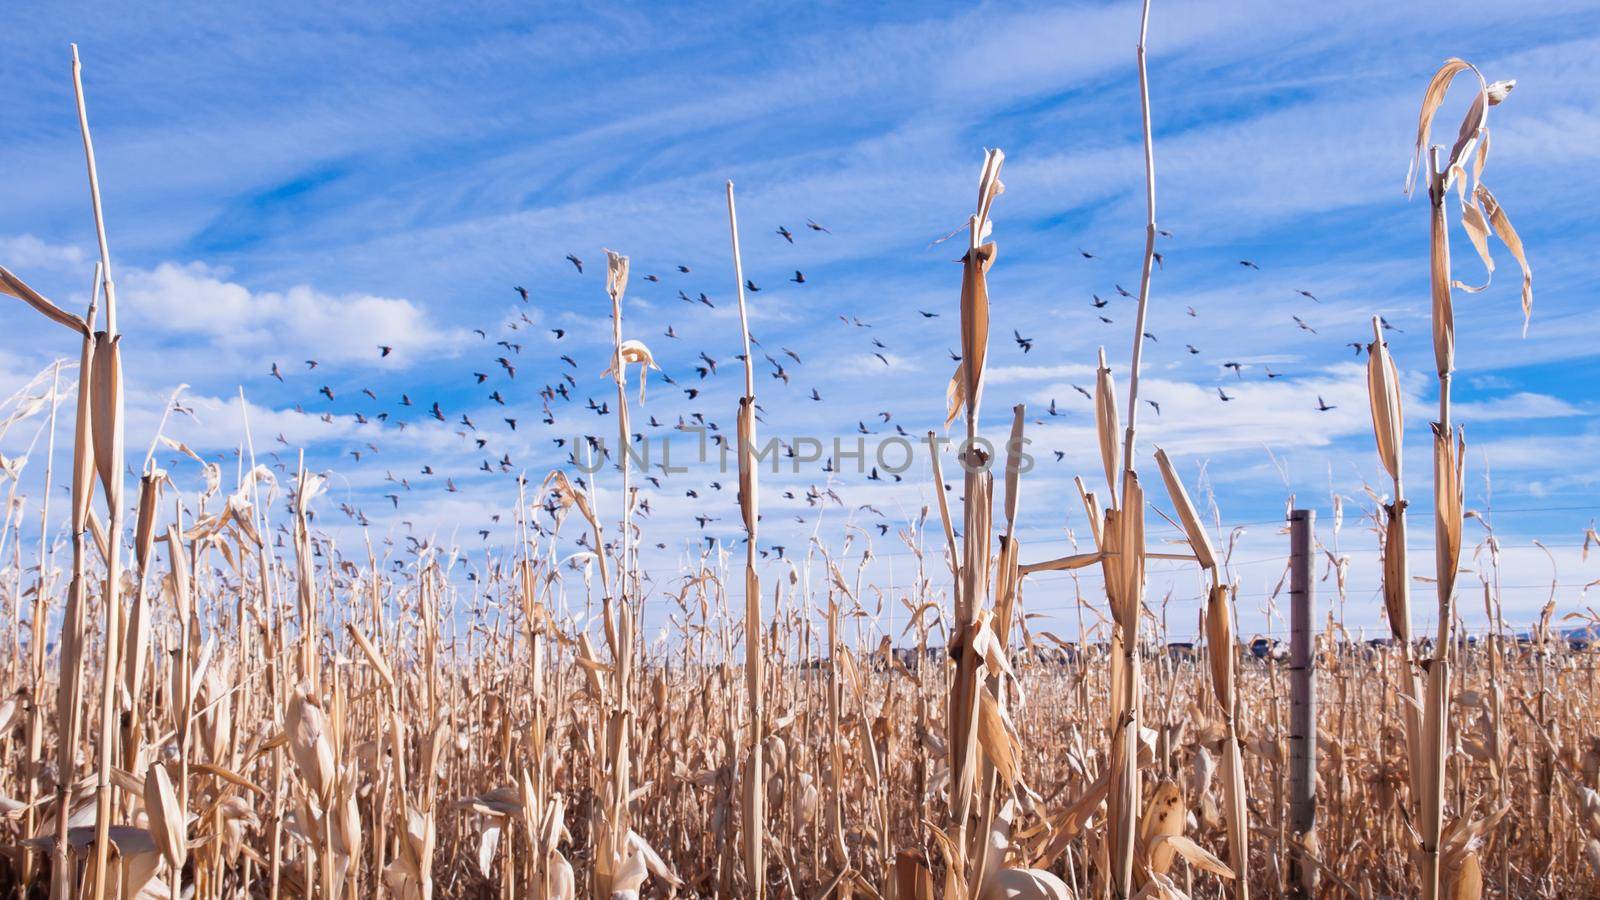 Crows in corn field by arinahabich